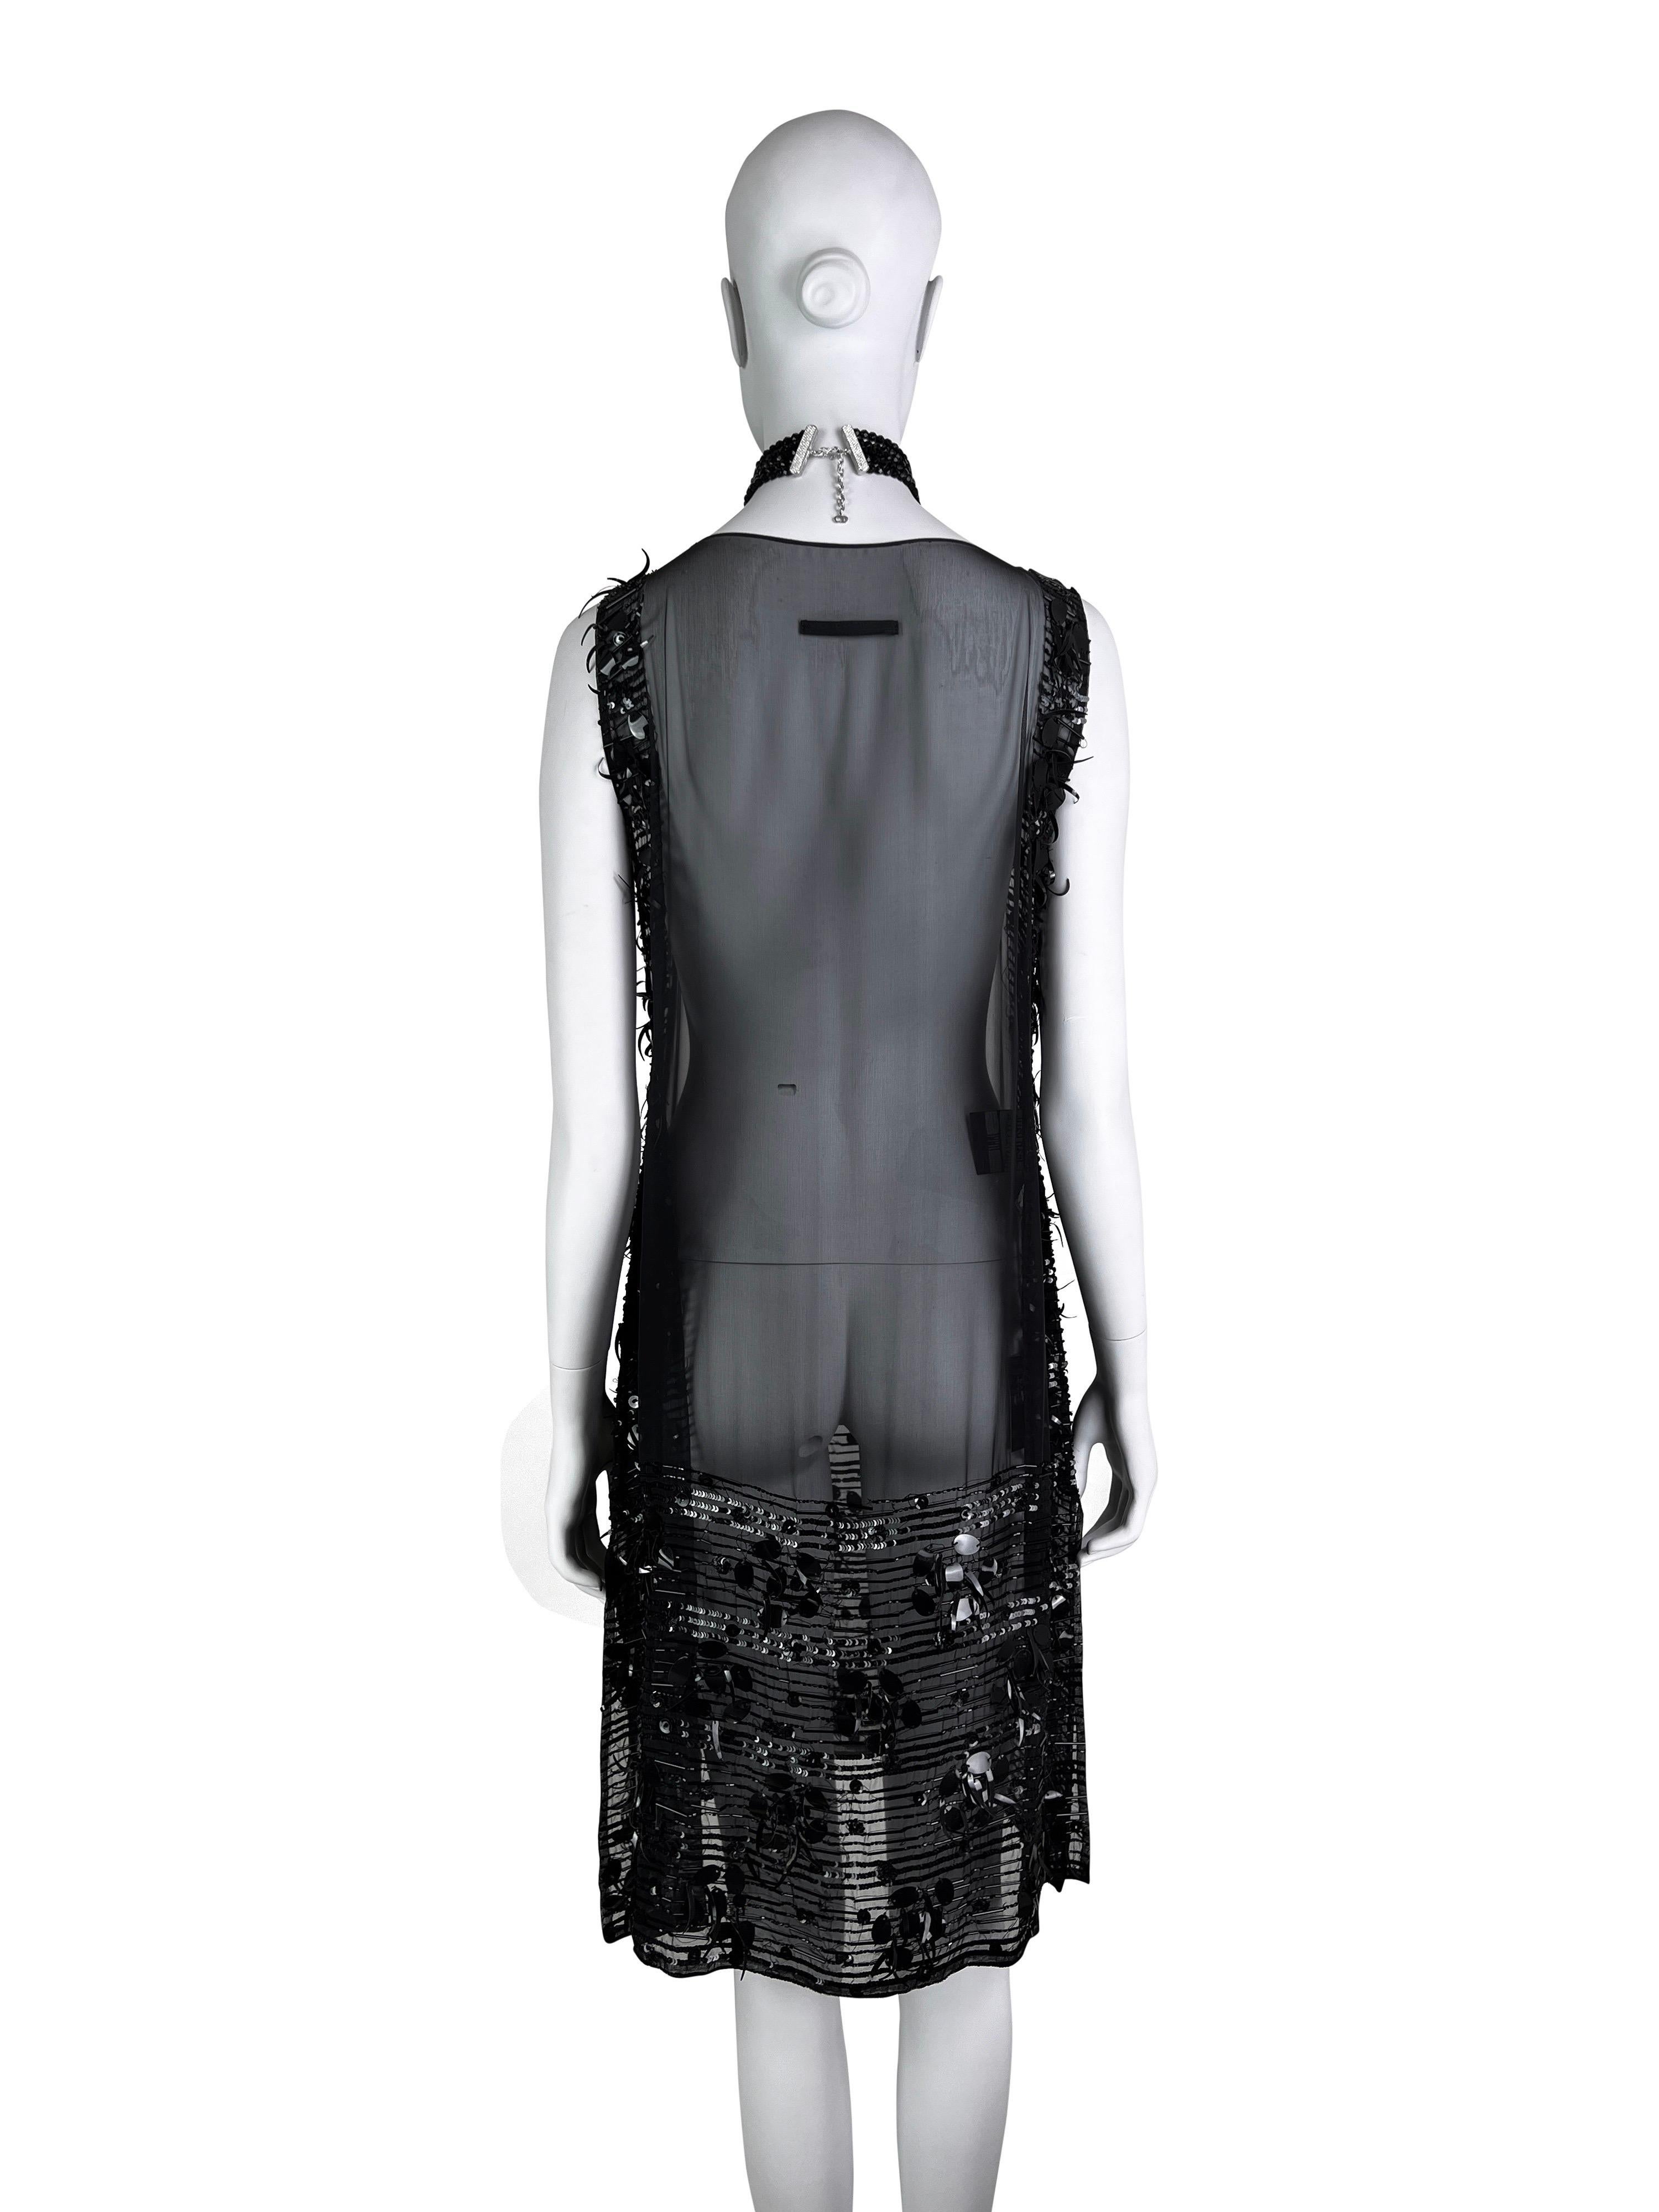 Jean-Paul Gaultier Fall 2004 Embellished Black Silk Chiffon Tunic Dress For Sale 4